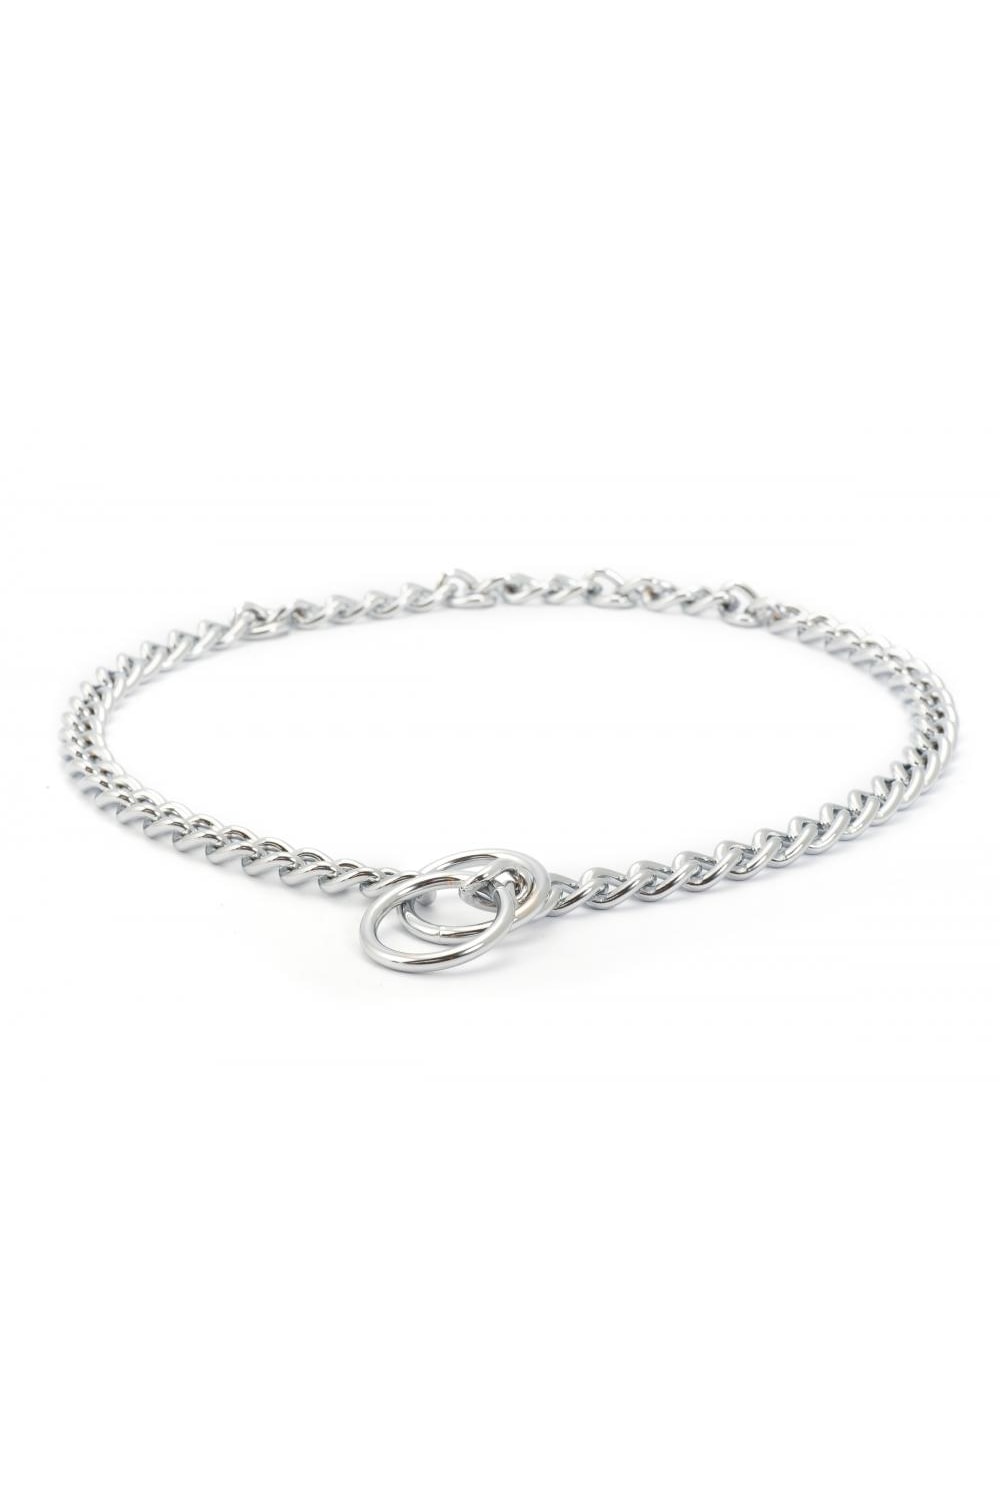 Ancol Medium Check Dog Chain (Silver) (Size 5 - 20in)